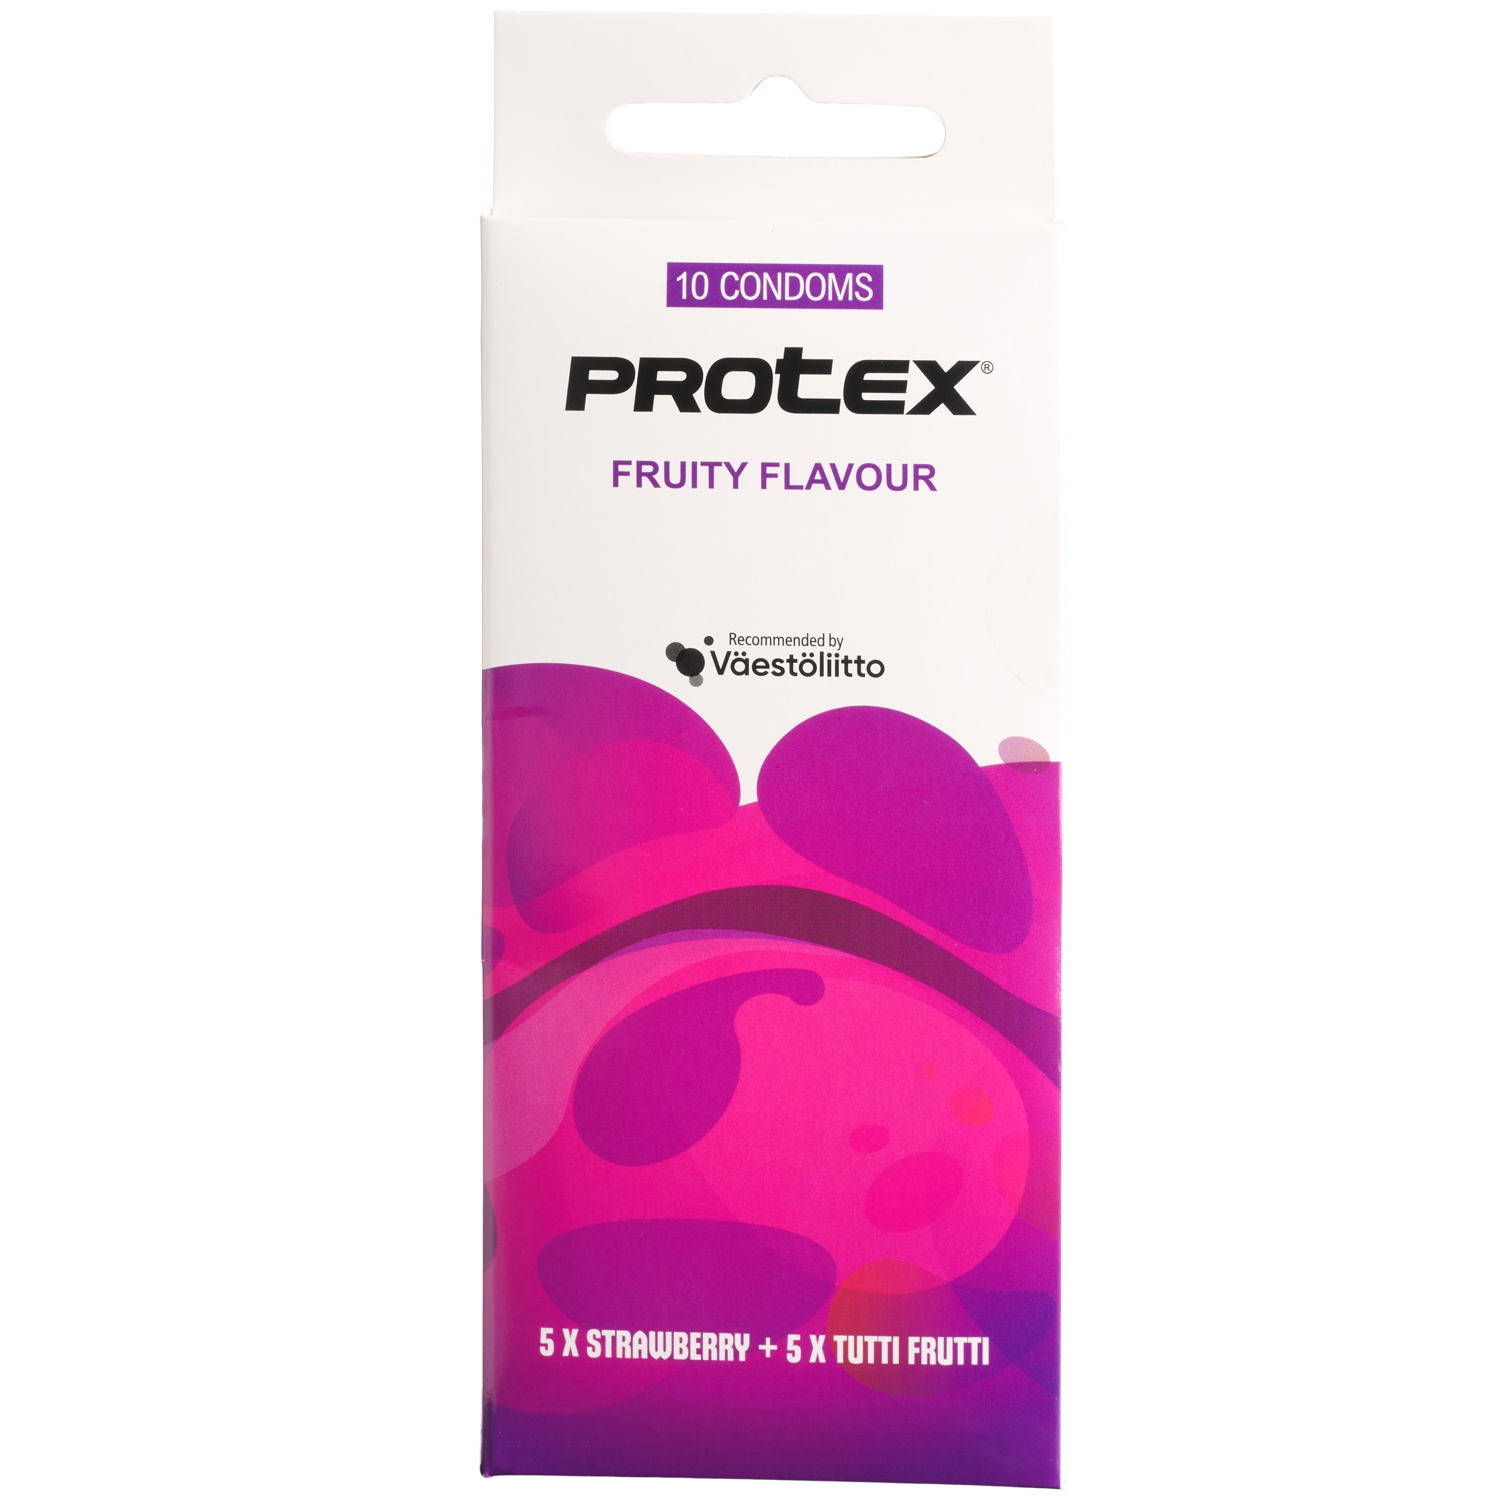 Protex Fruity Flavour Strawberry & Tutti Frutti Kondomer 10 stk - Klar thumbnail